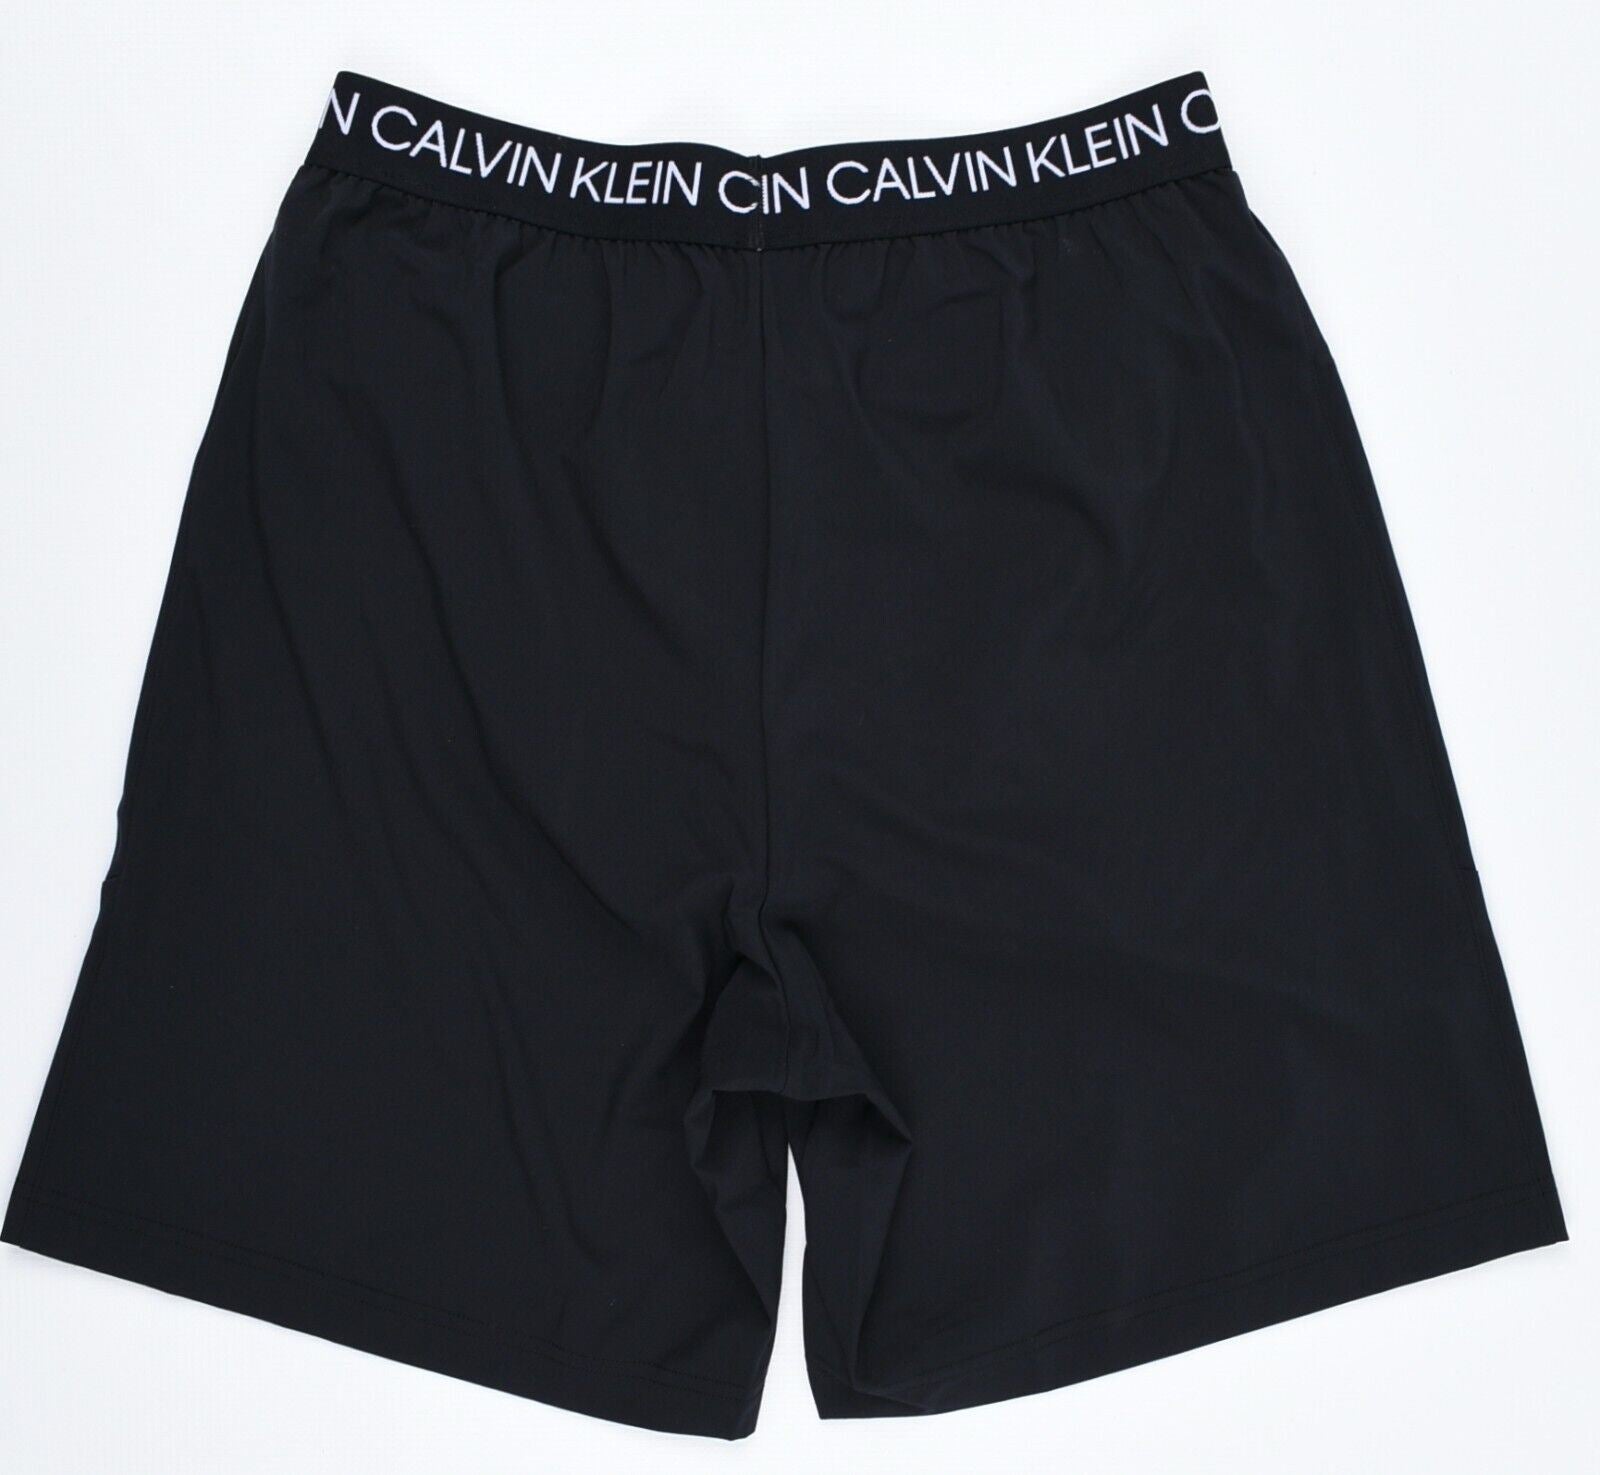 CALVIN KLEIN Performance:  Men's Essential Sports Shorts, Black, size S